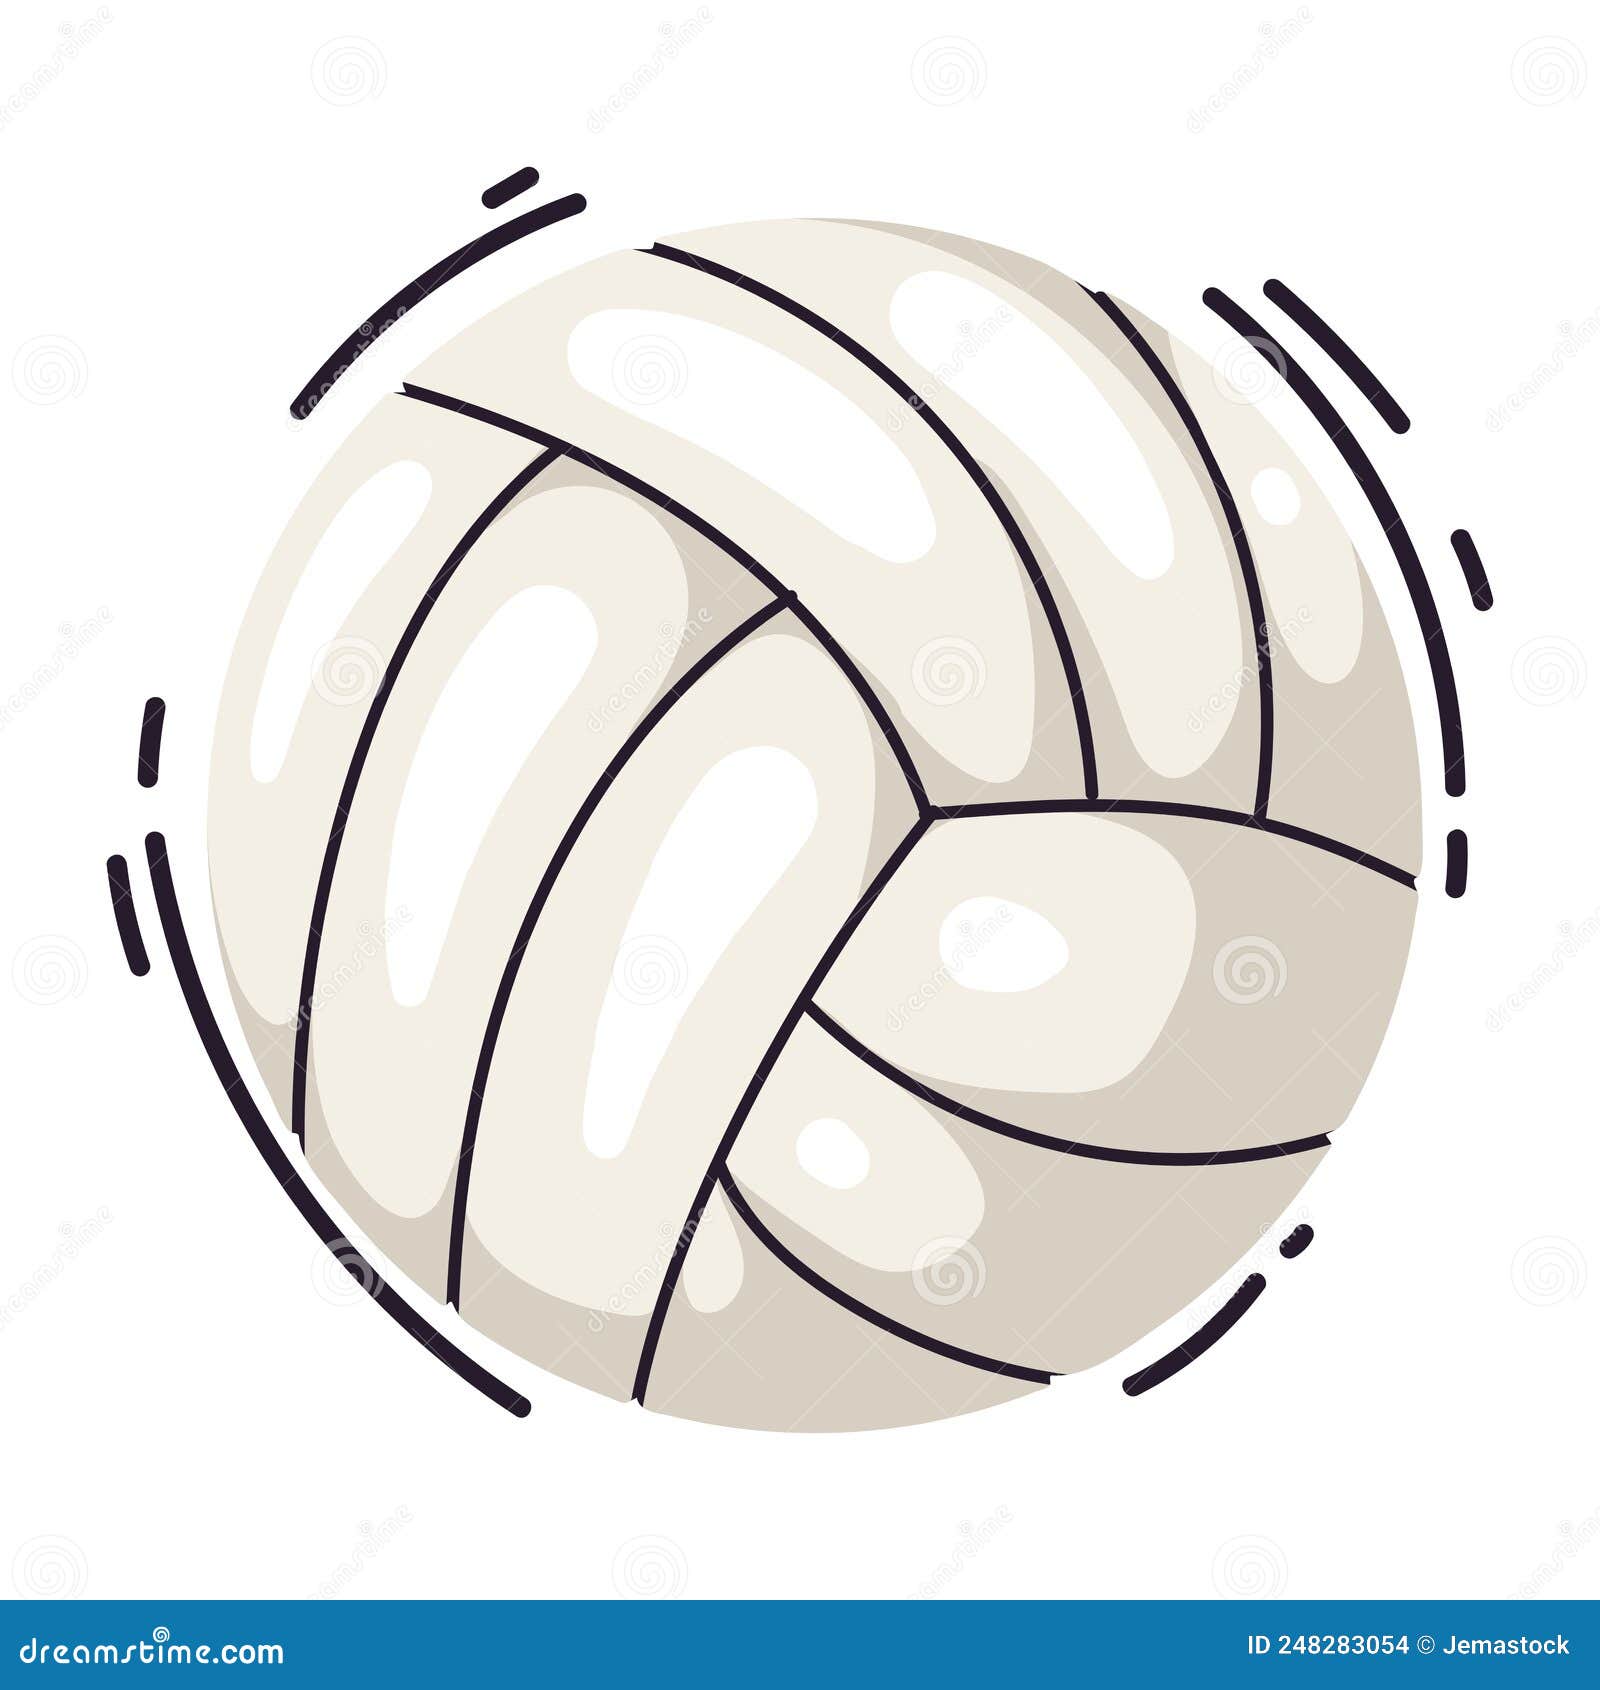 Volleyball sport balloon stock vector. Illustration of game - 248283054